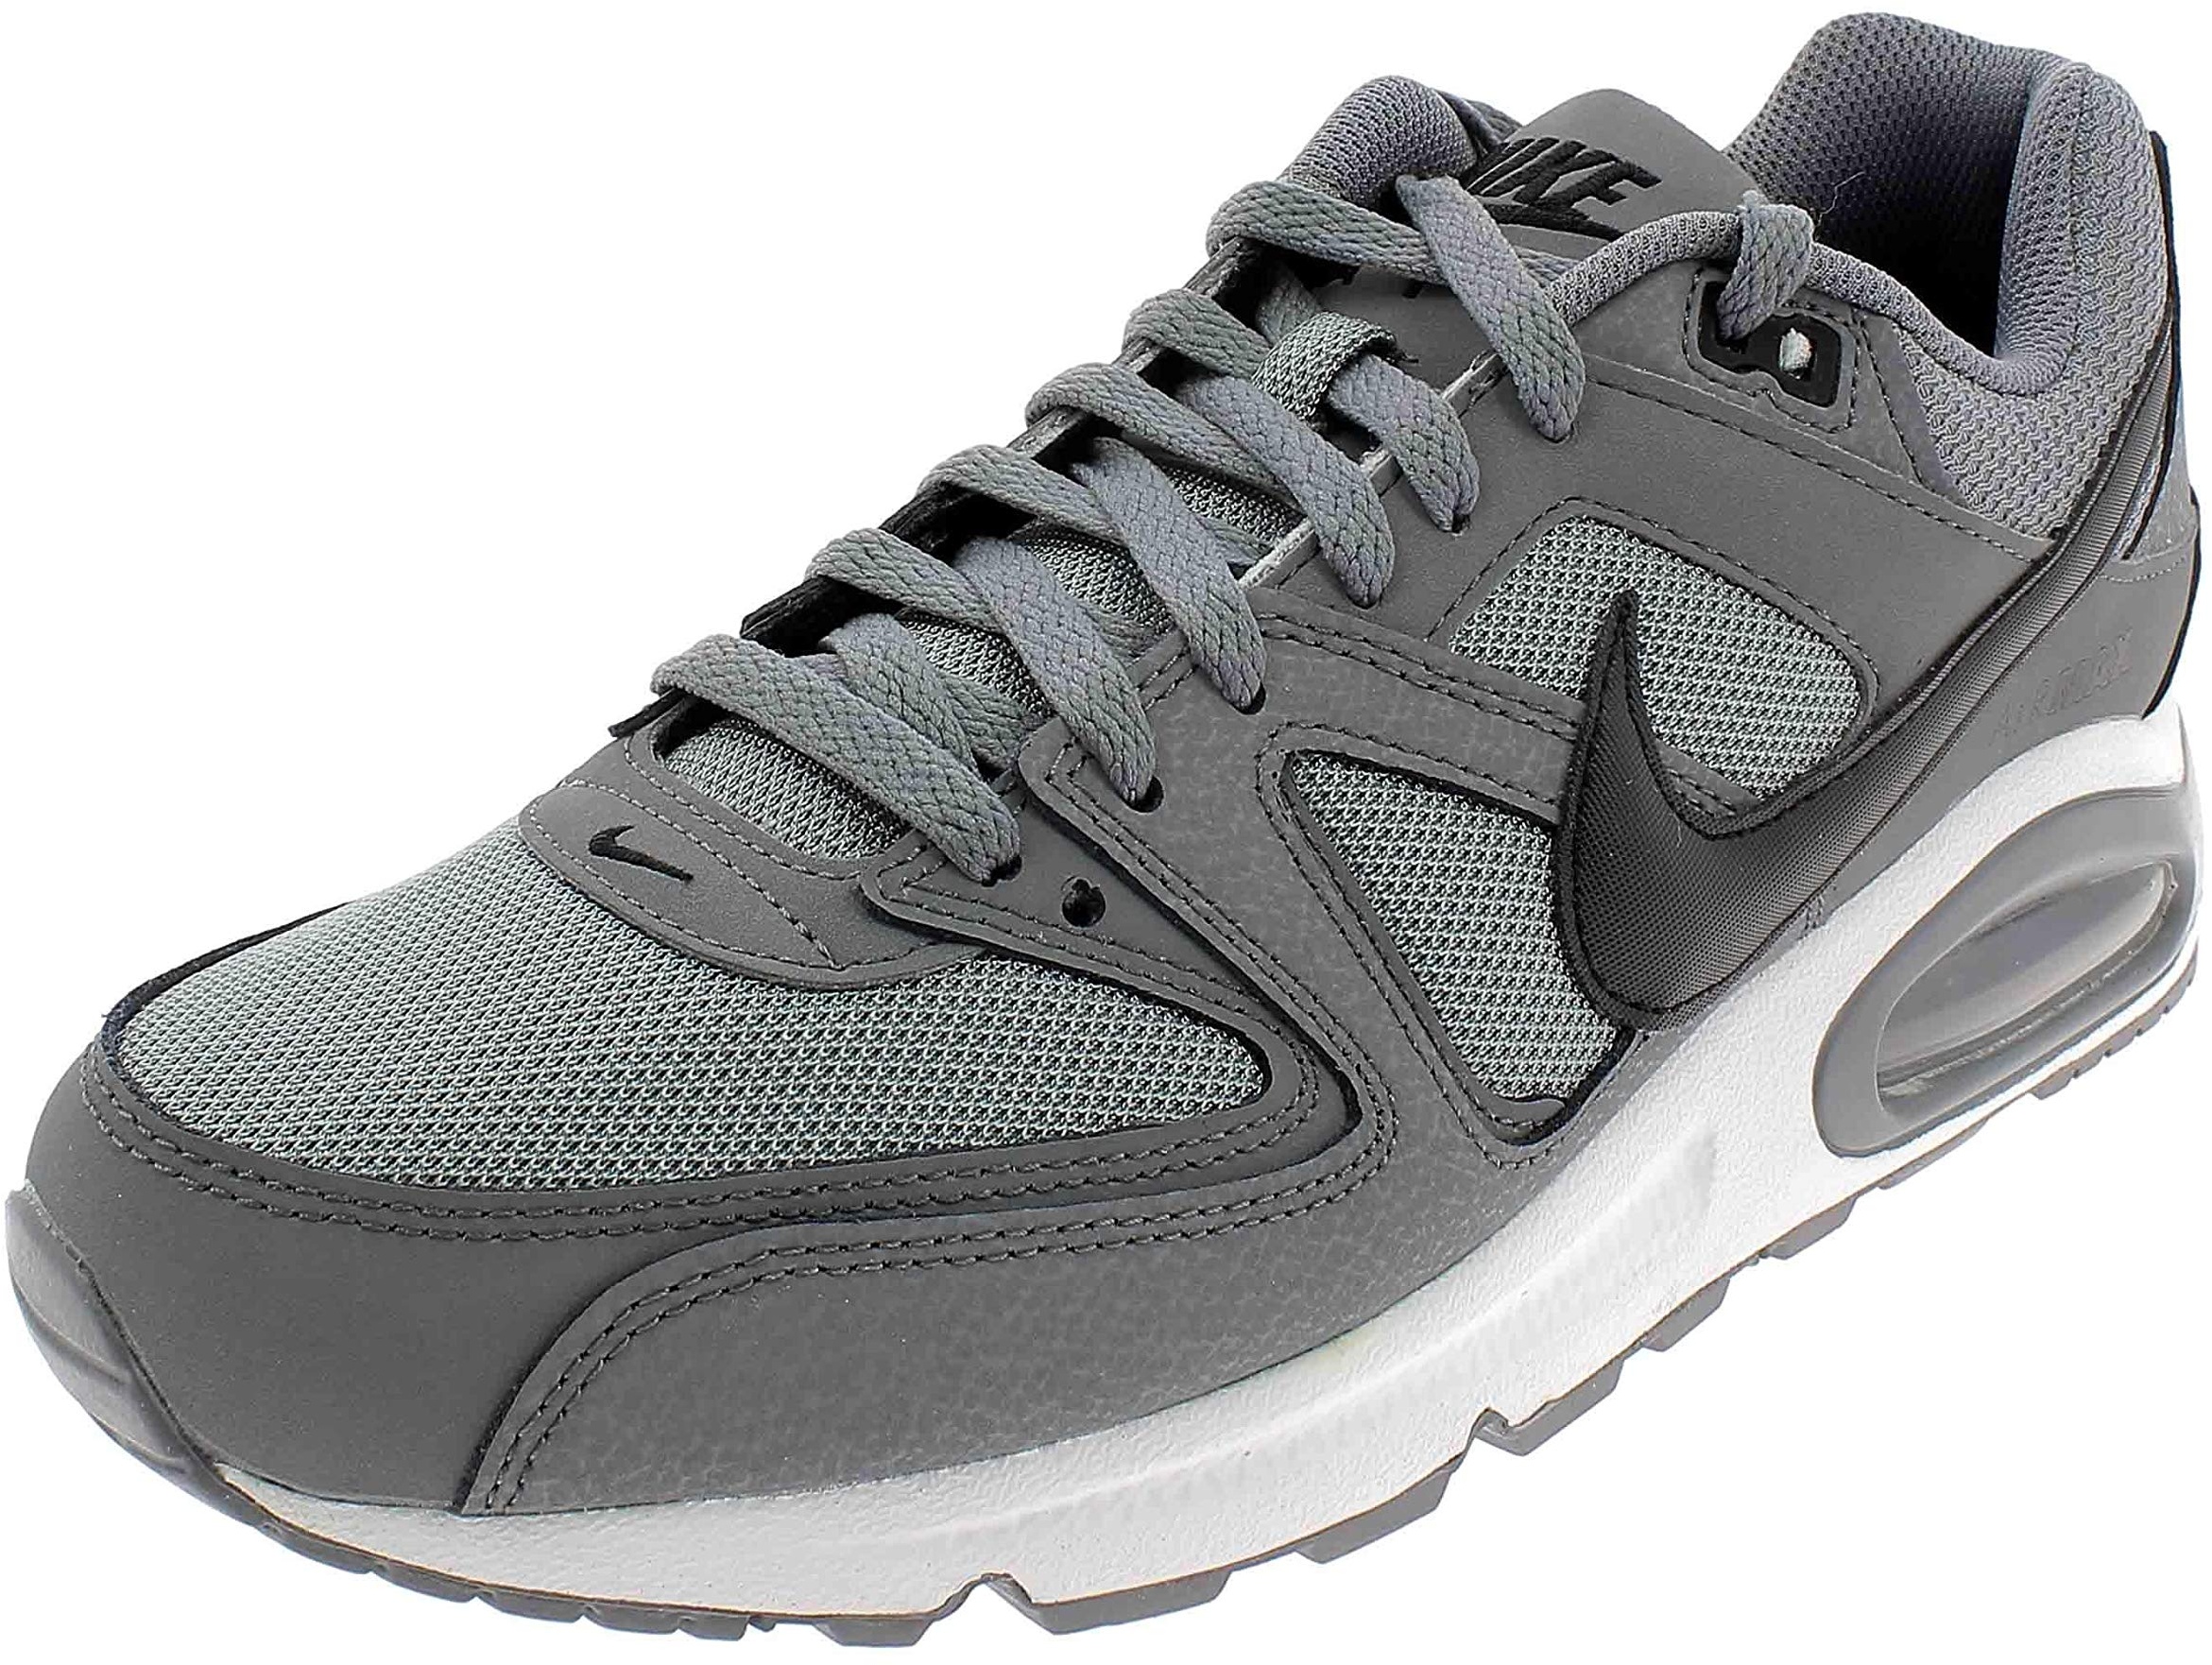 Nike Herren AIR MAX Command Laufschuhe, Grau (Cool Grey/Black/White 012) - 44 EU